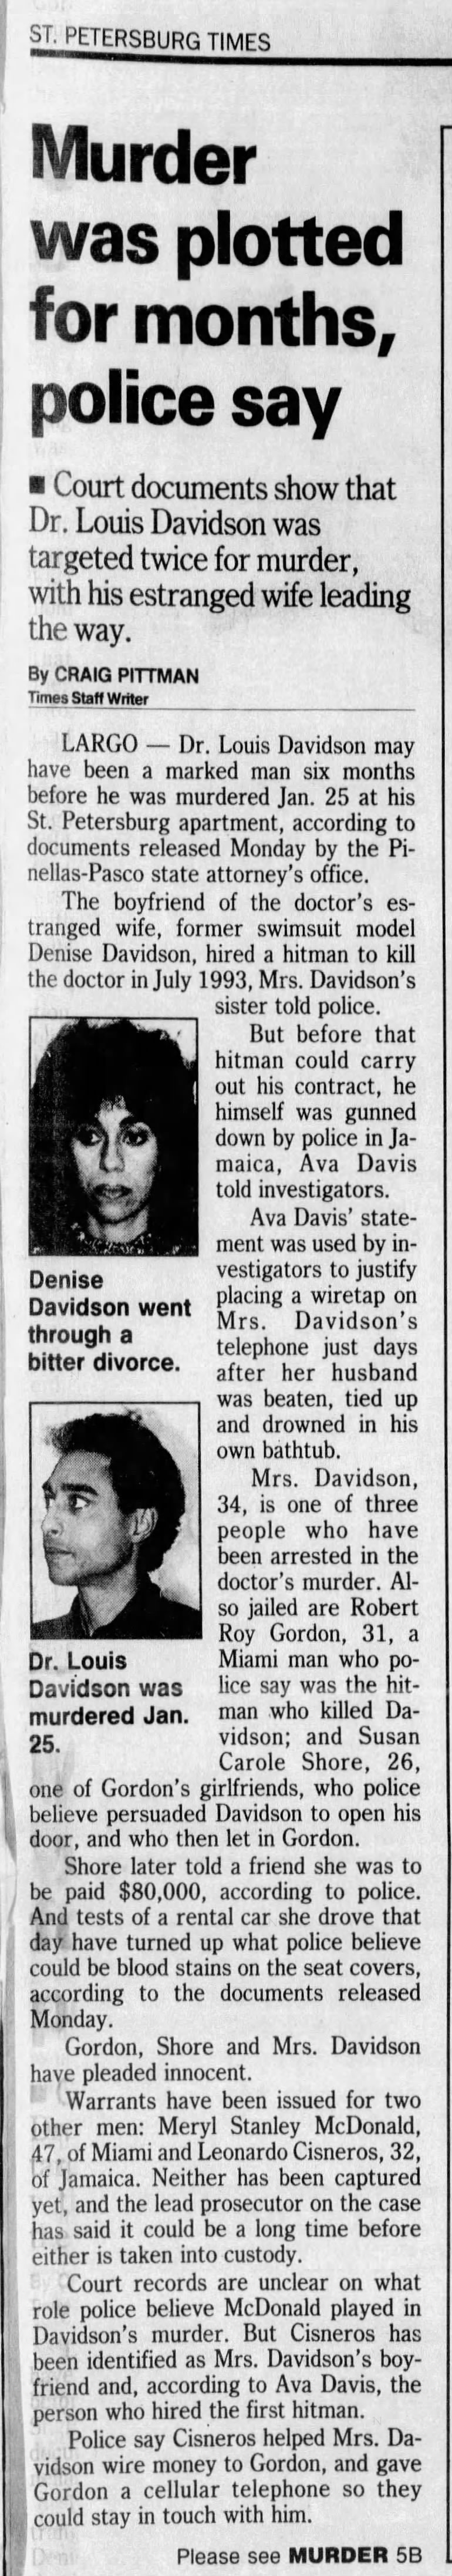 Denise Davidson Murder planned for months